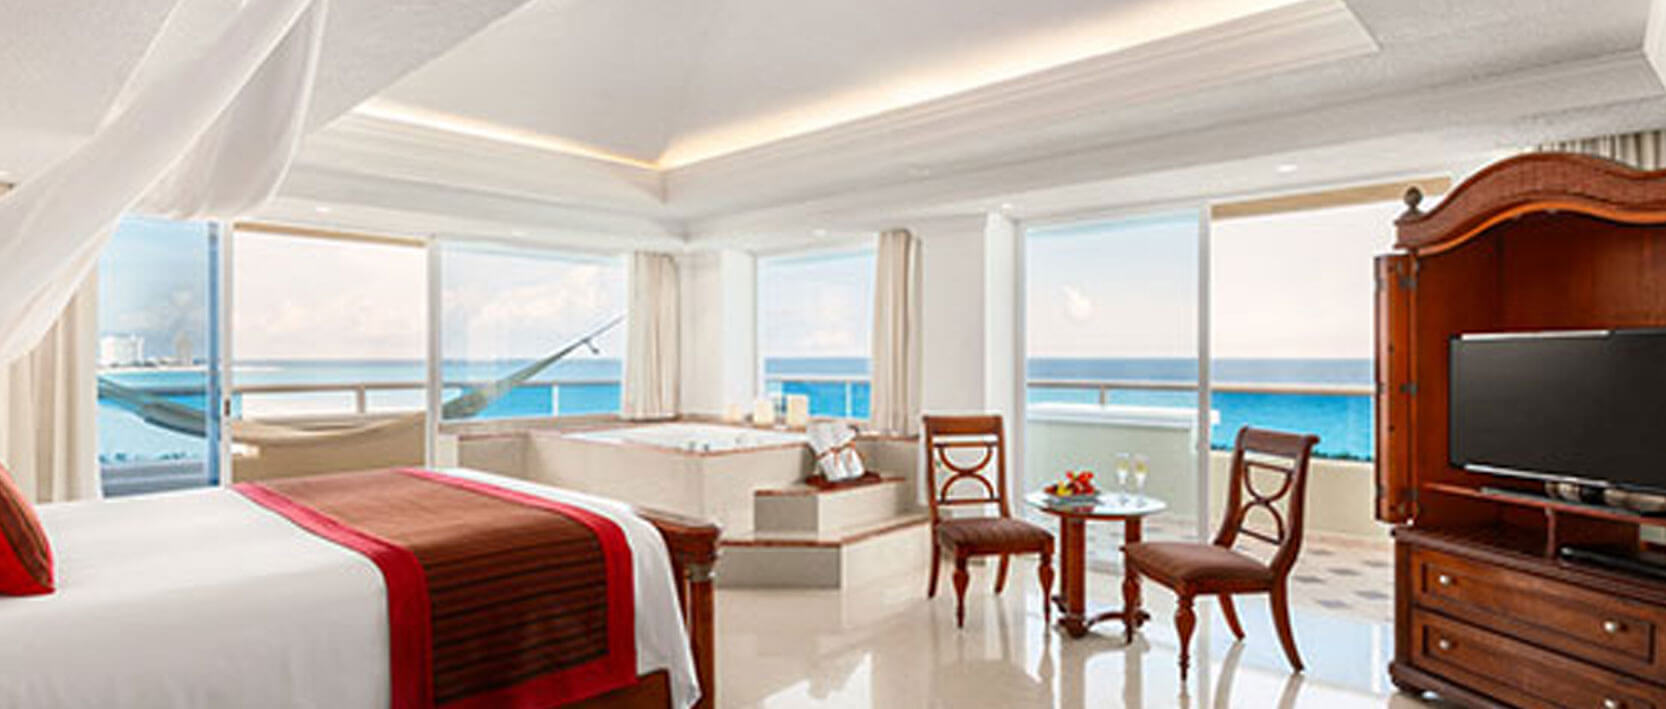 Gran Caribe Cancun Accommodations - Gran Presidential Suite Ocean View